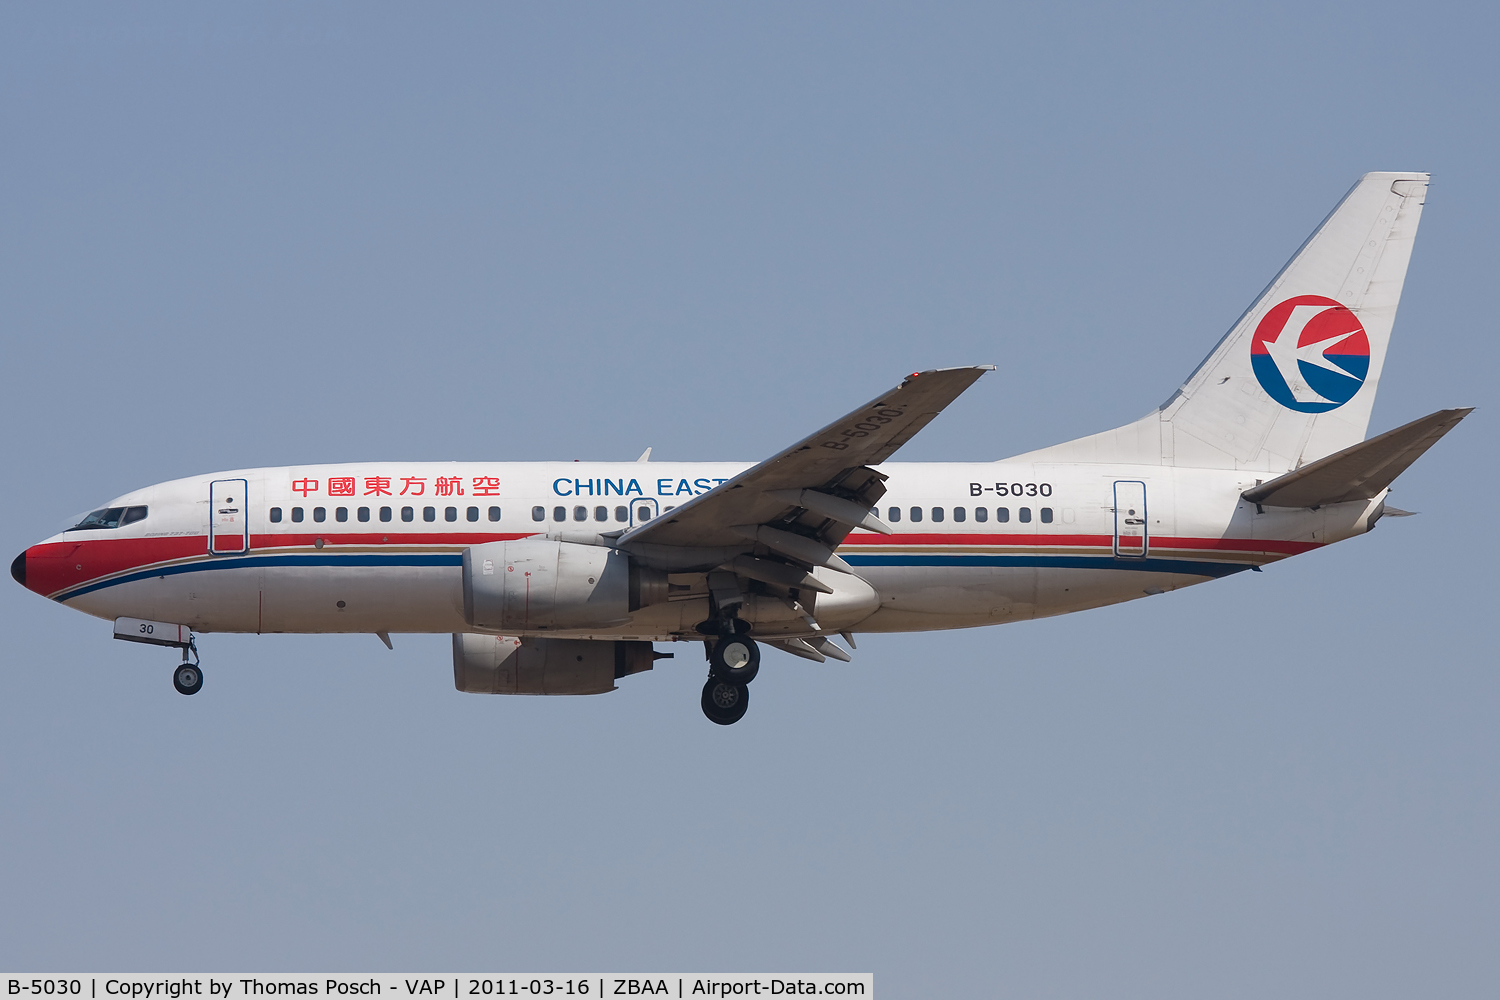 B-5030, 2002 Boeing 737-79P C/N 30651, China Eastern Airlines